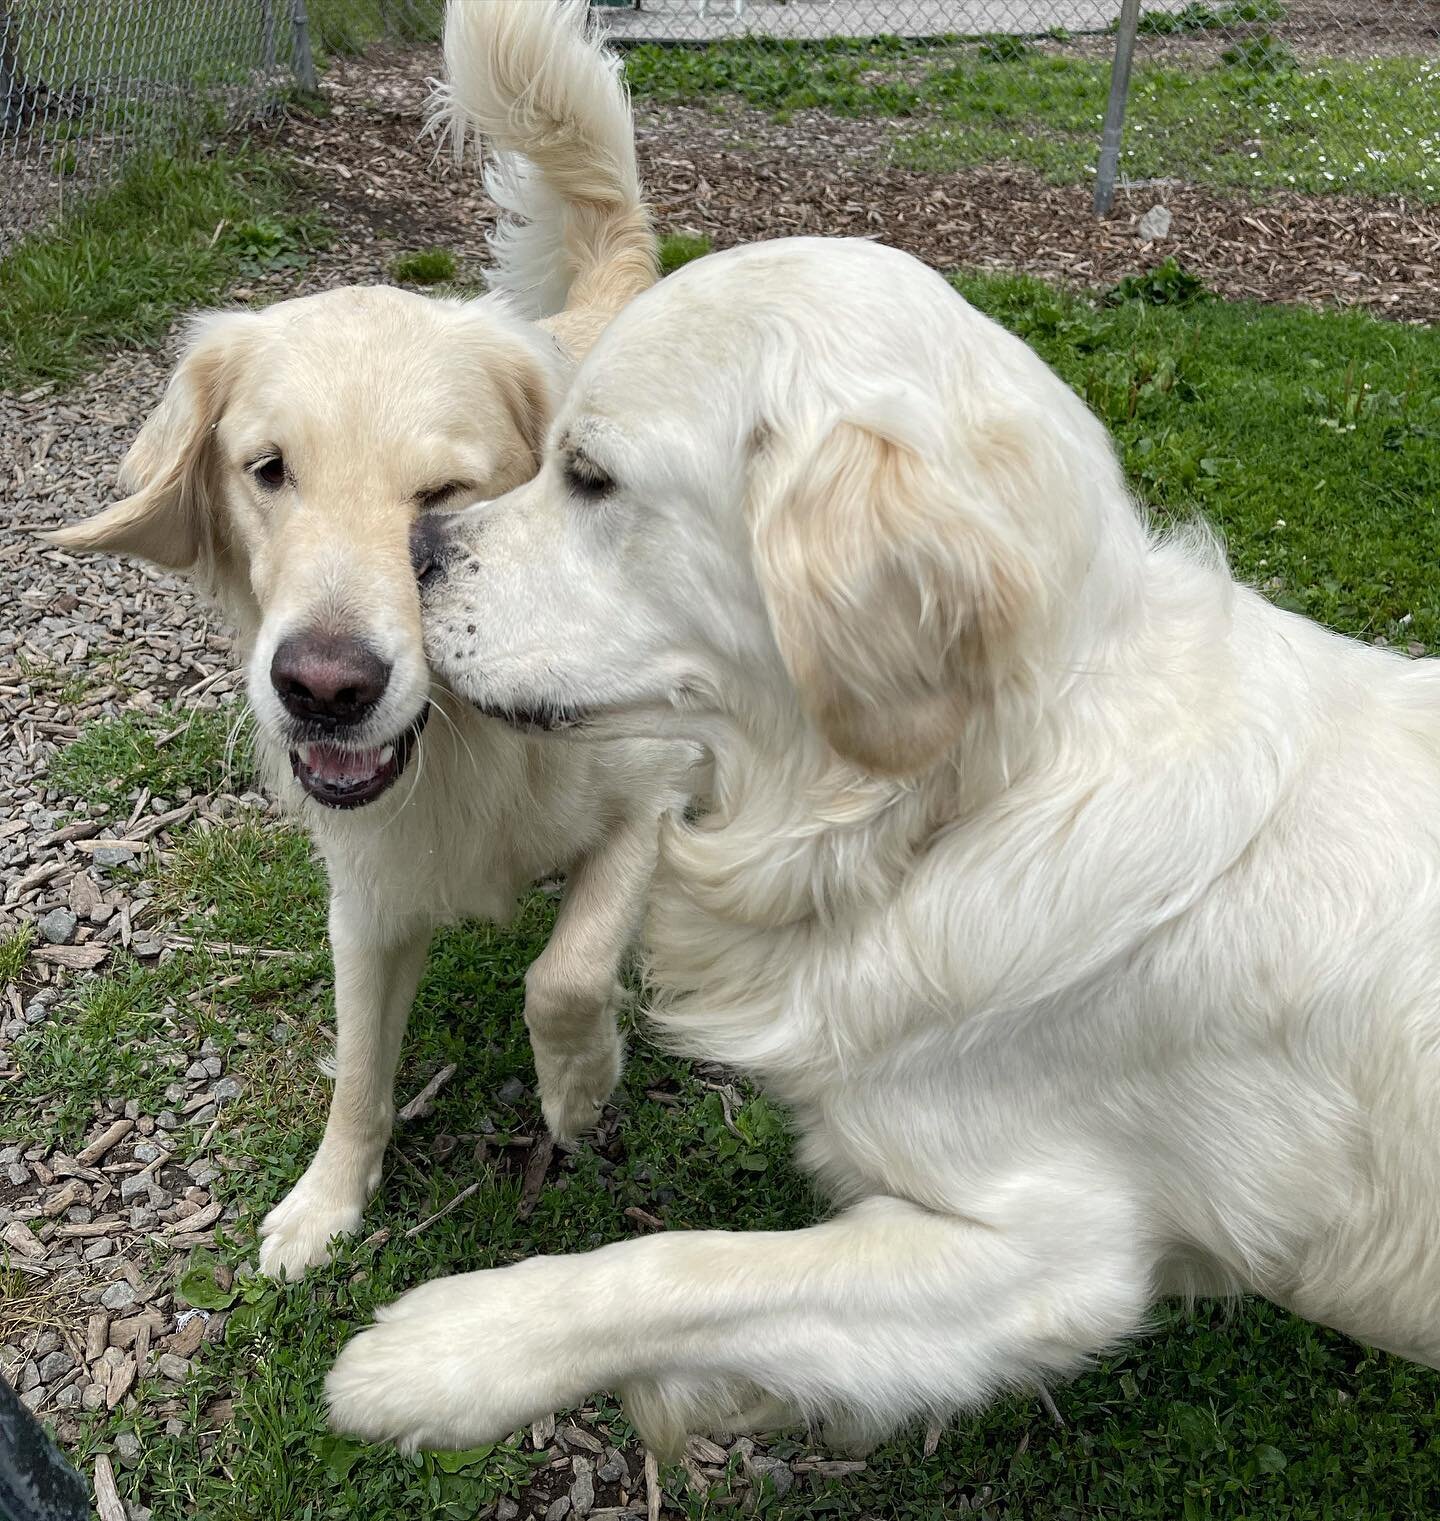 Kisses for your #bff 😘😘

#love #dogsofinstagram #cutedogs #dogsofrhodeisland #dogstagram #golden #dogs #creamgoldenretriever #love #instadogs #dogsofinstaworld #bestfriends #kisses #doglover #doglovers #friends #besties #friendshipgoals #pals 
#fol